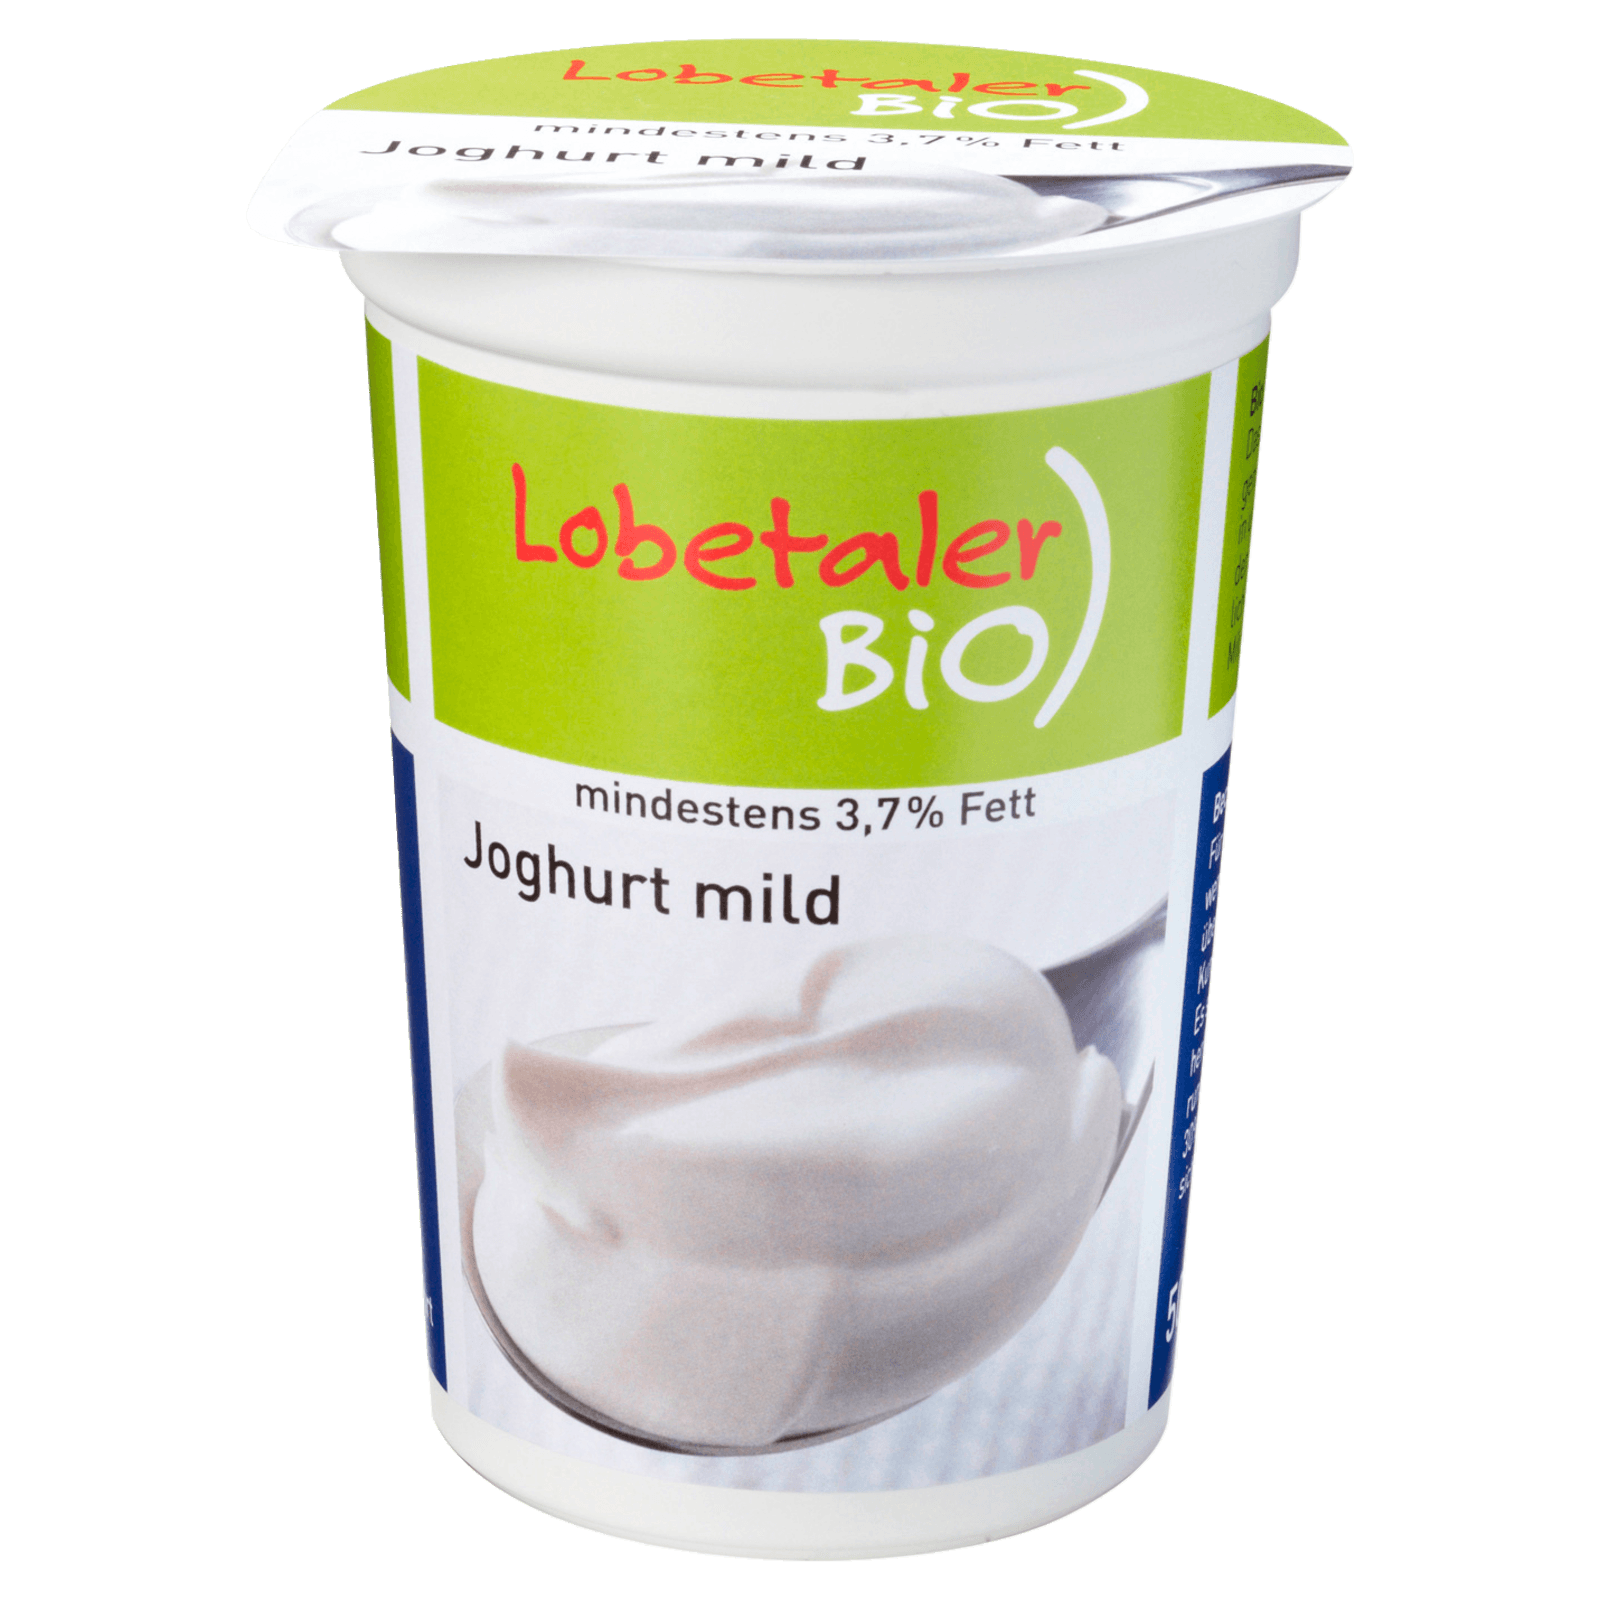 Lobetaler Bio-Joghurt Natur 3,7% 500g  für 1.49 EUR